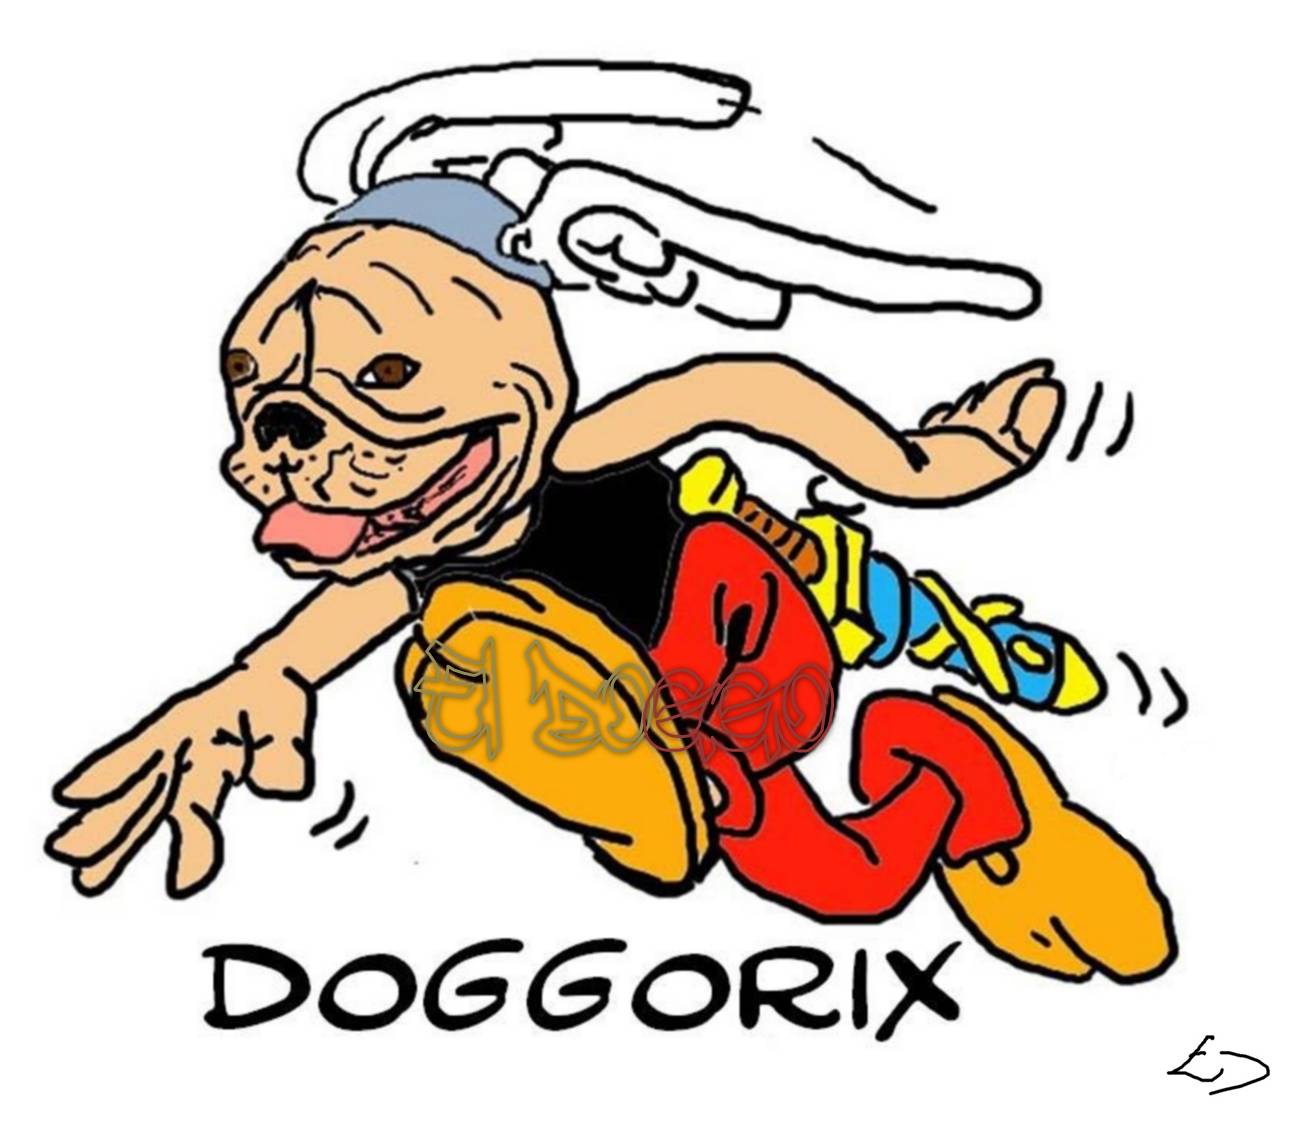 Doggorix